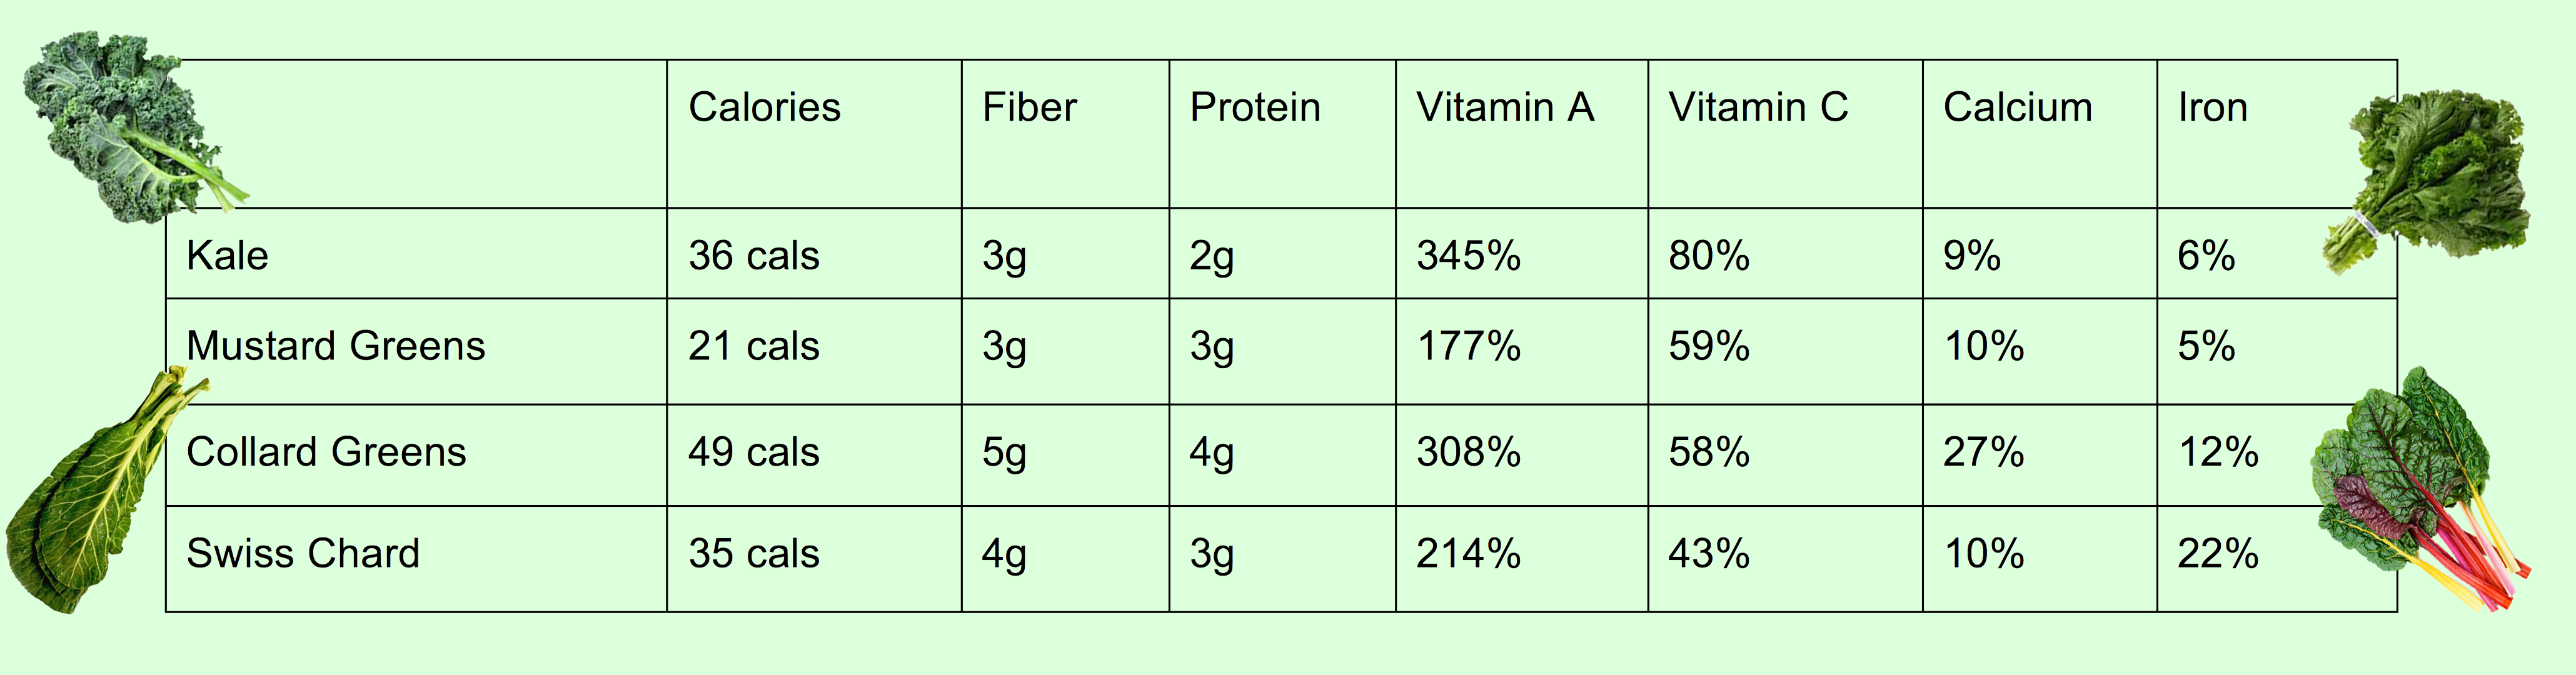 Data Source: SELF Nutrition Data